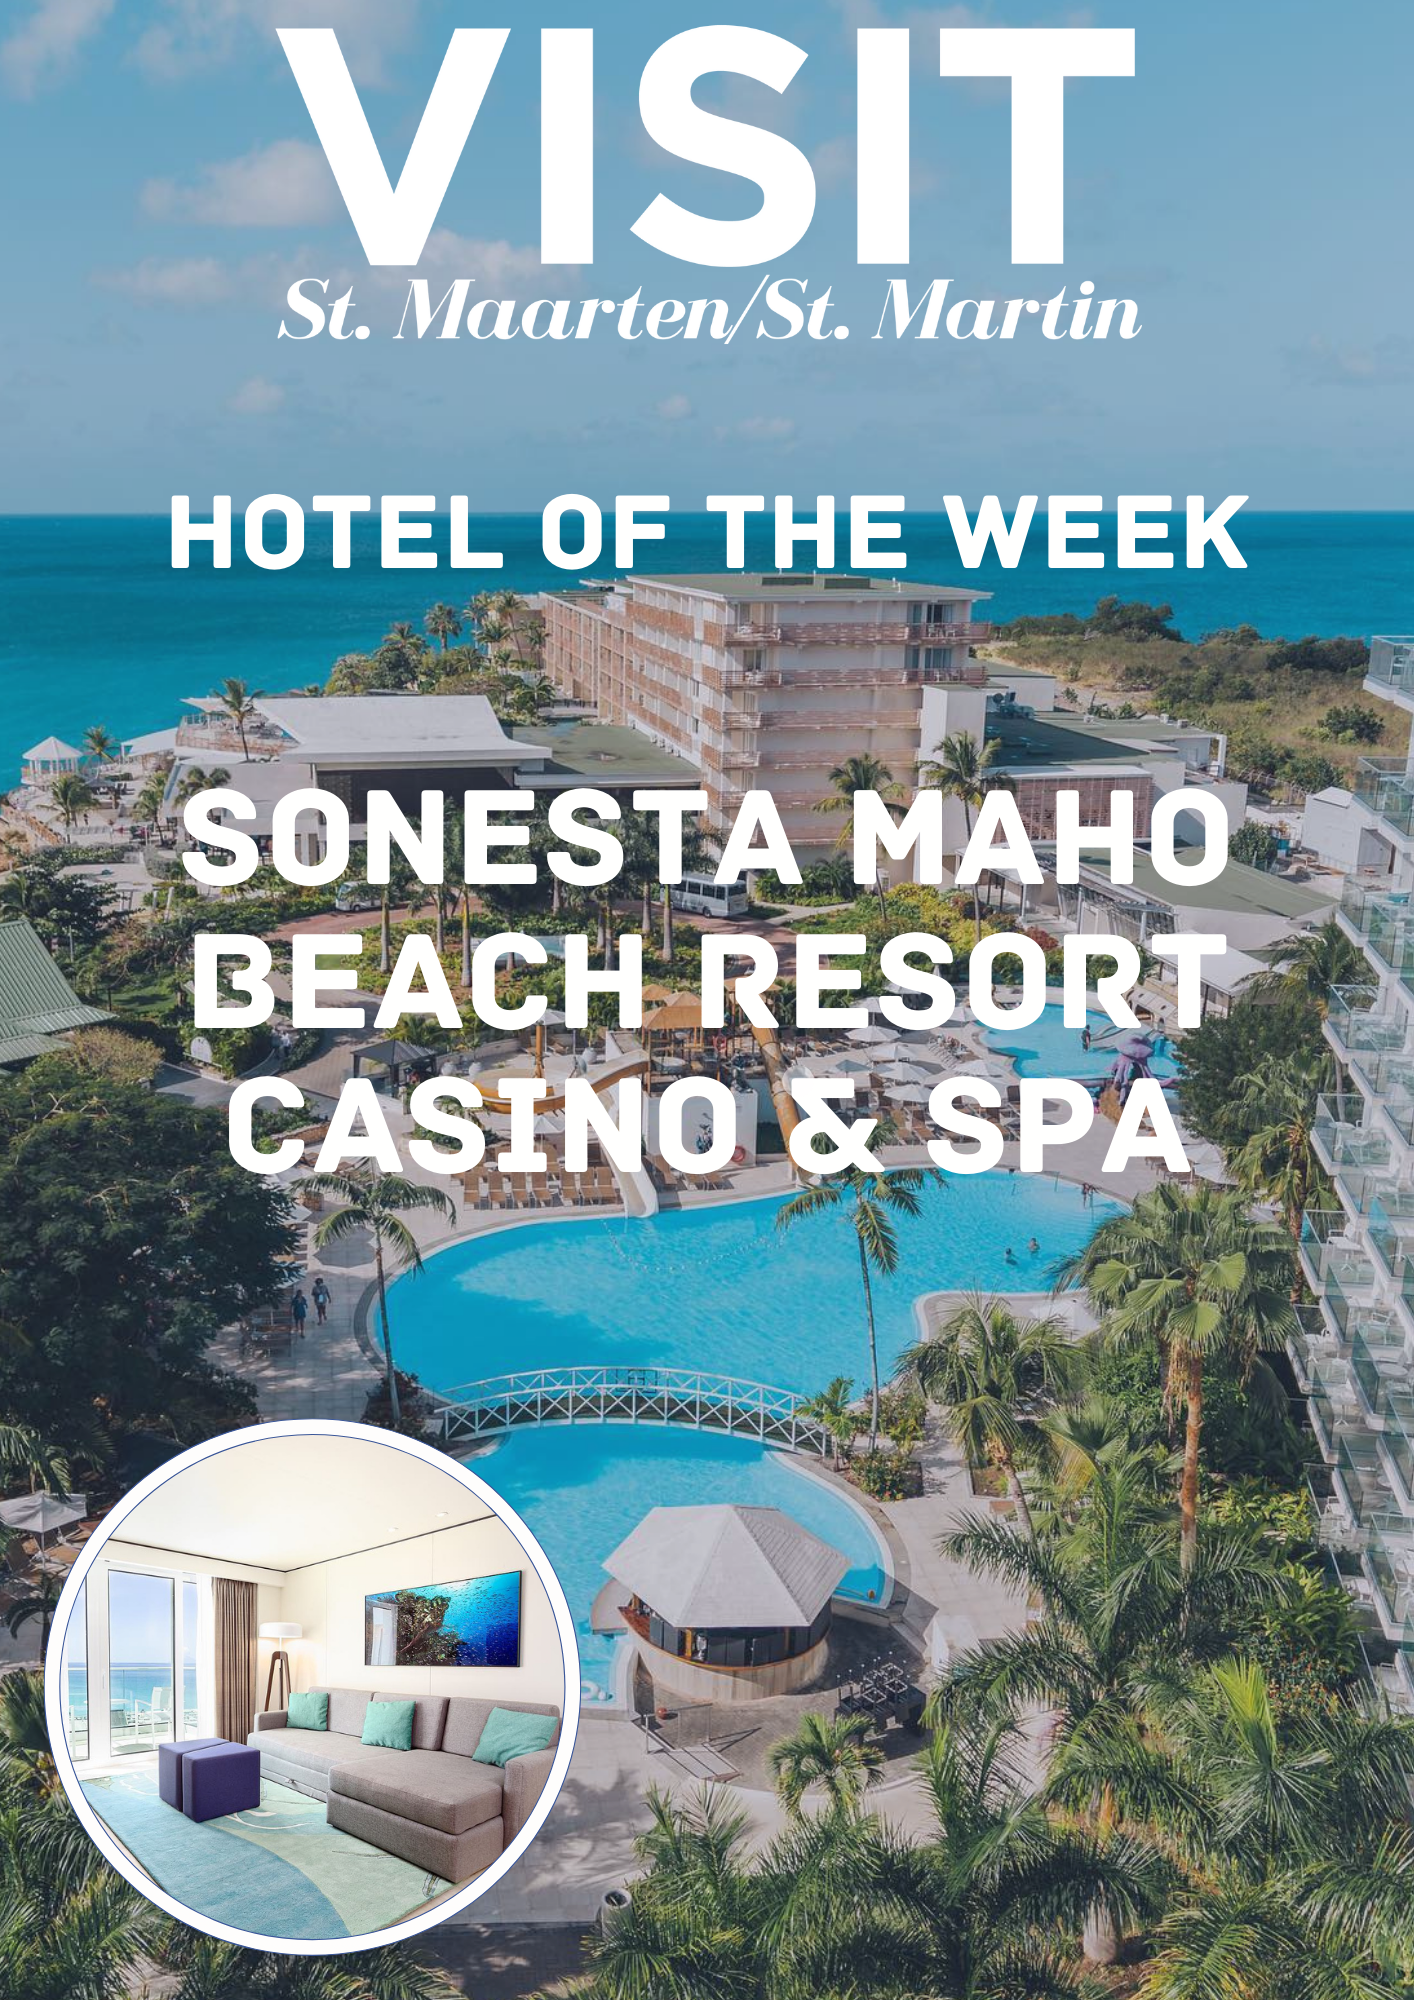 Hotel of the week Sonesta Maho Beach Resort Casino & Spa